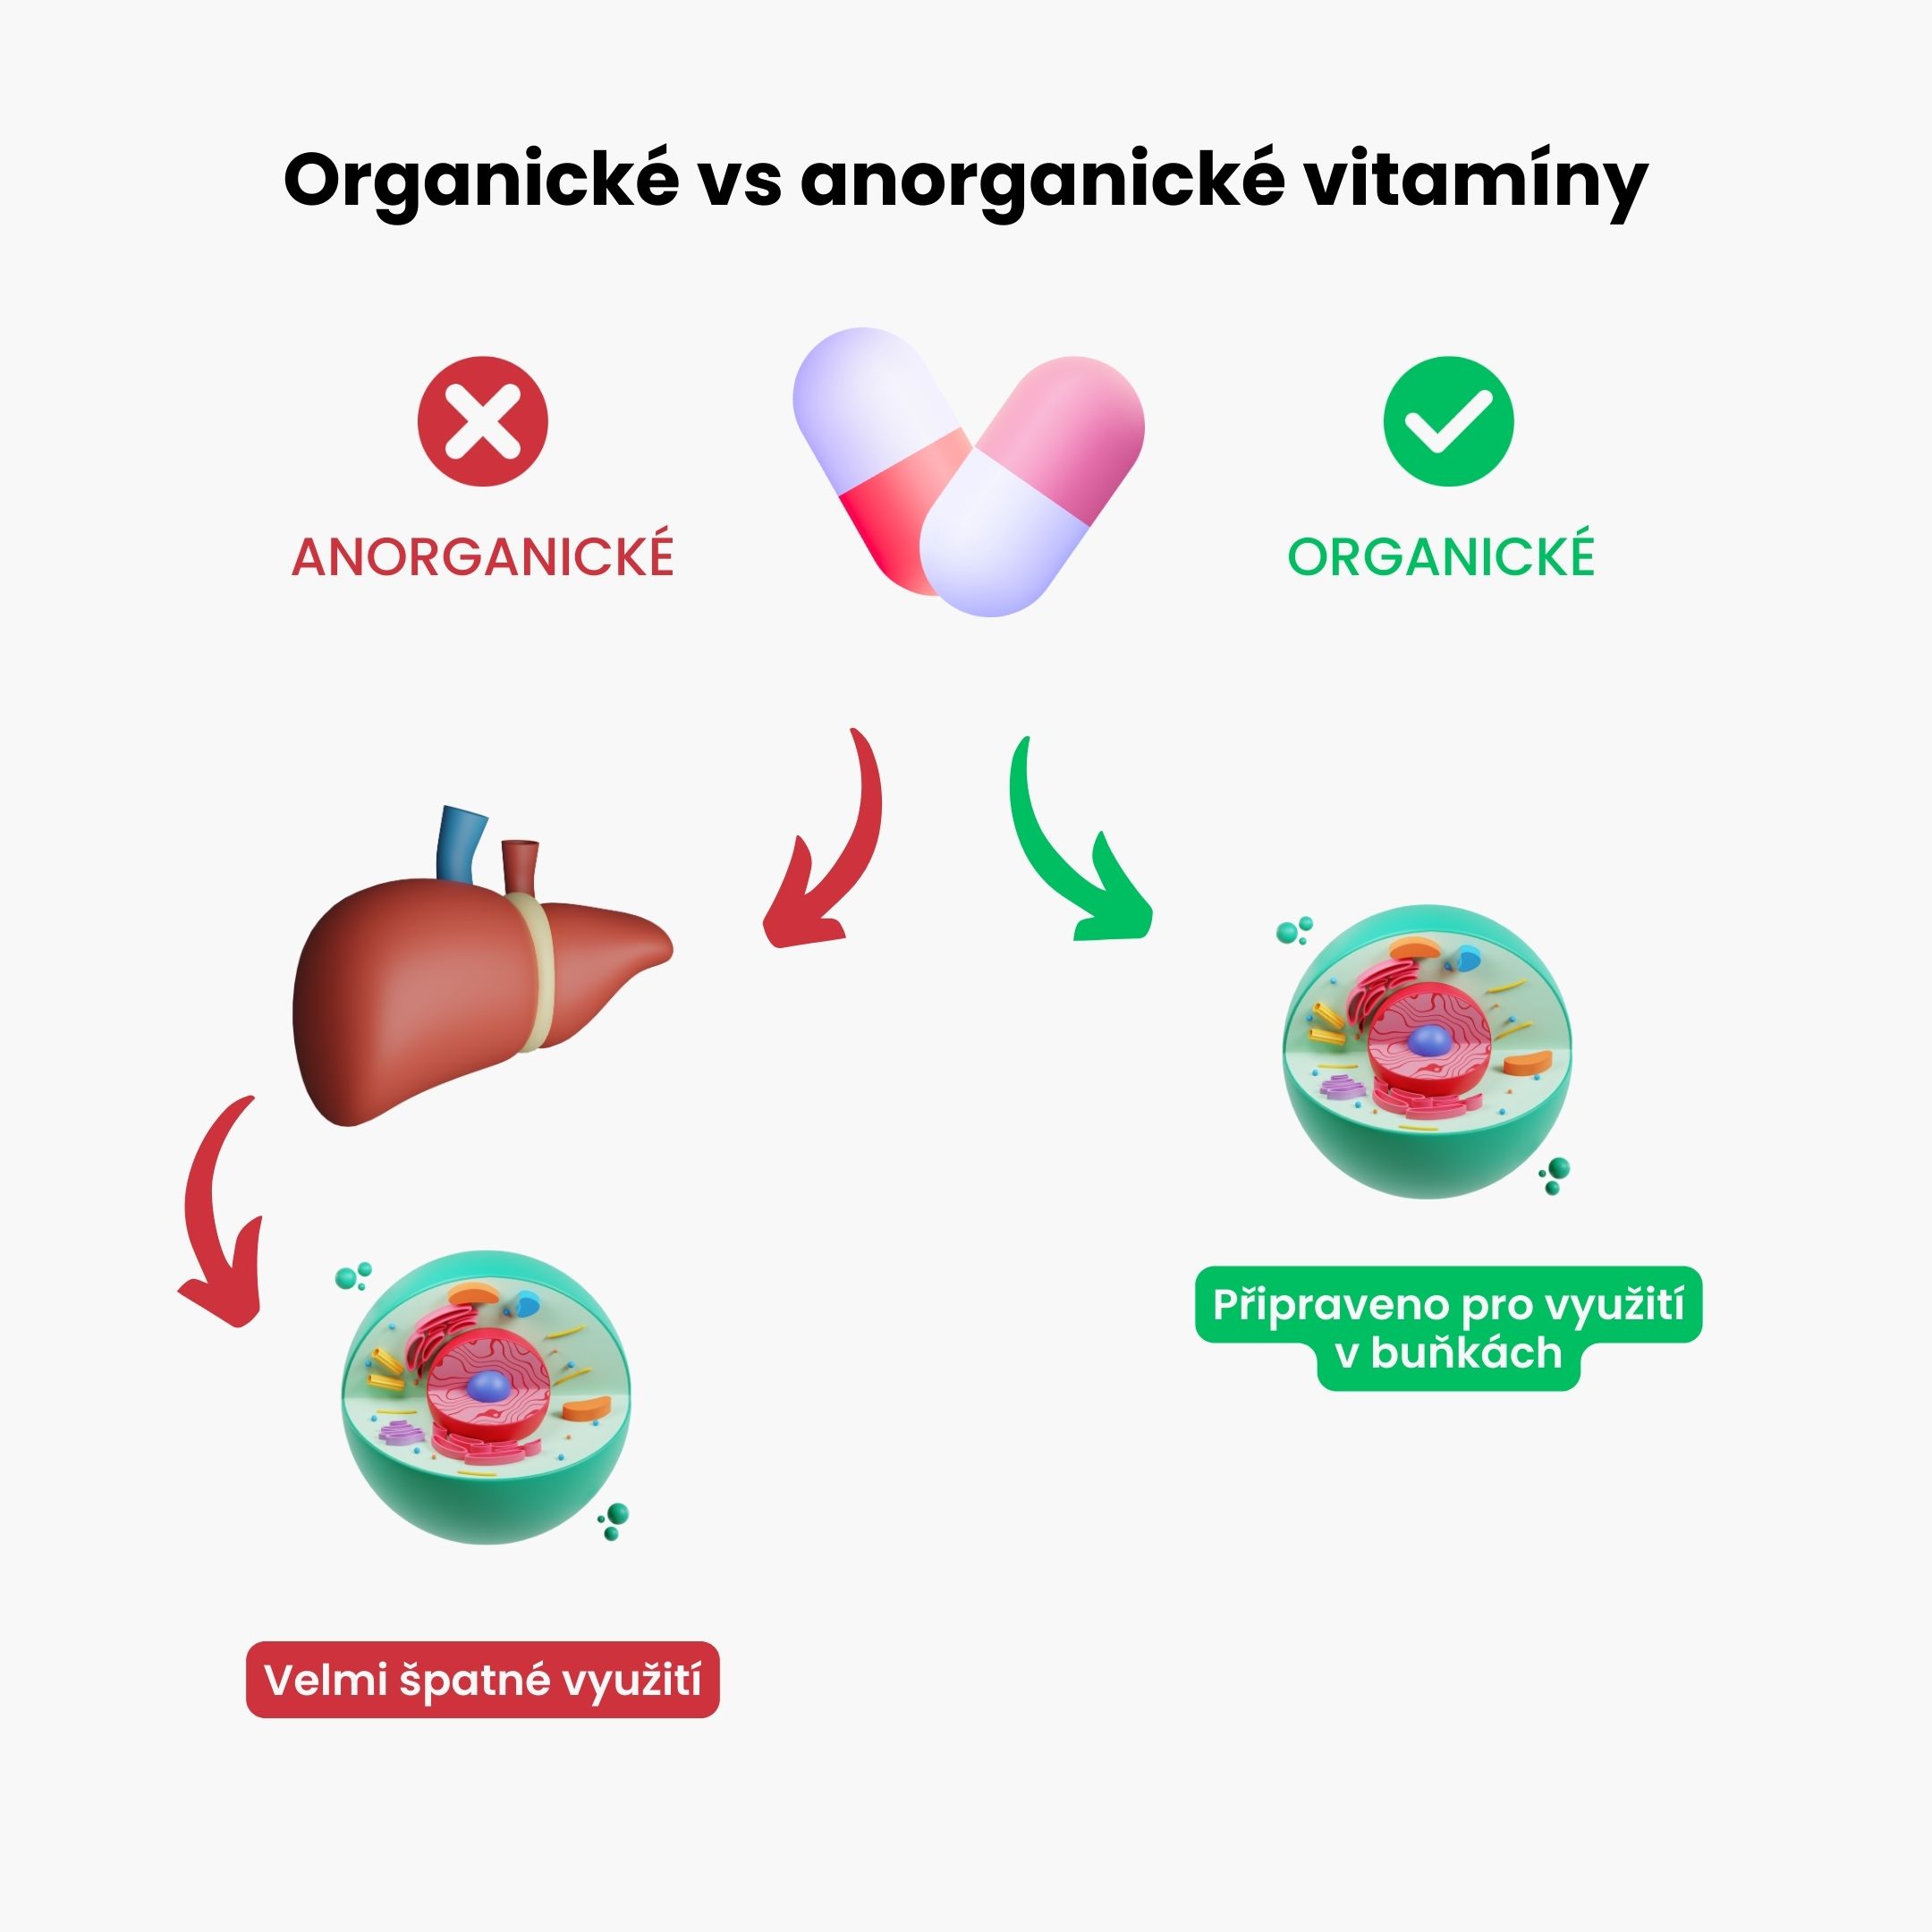 Prenatal organicke vitaminy